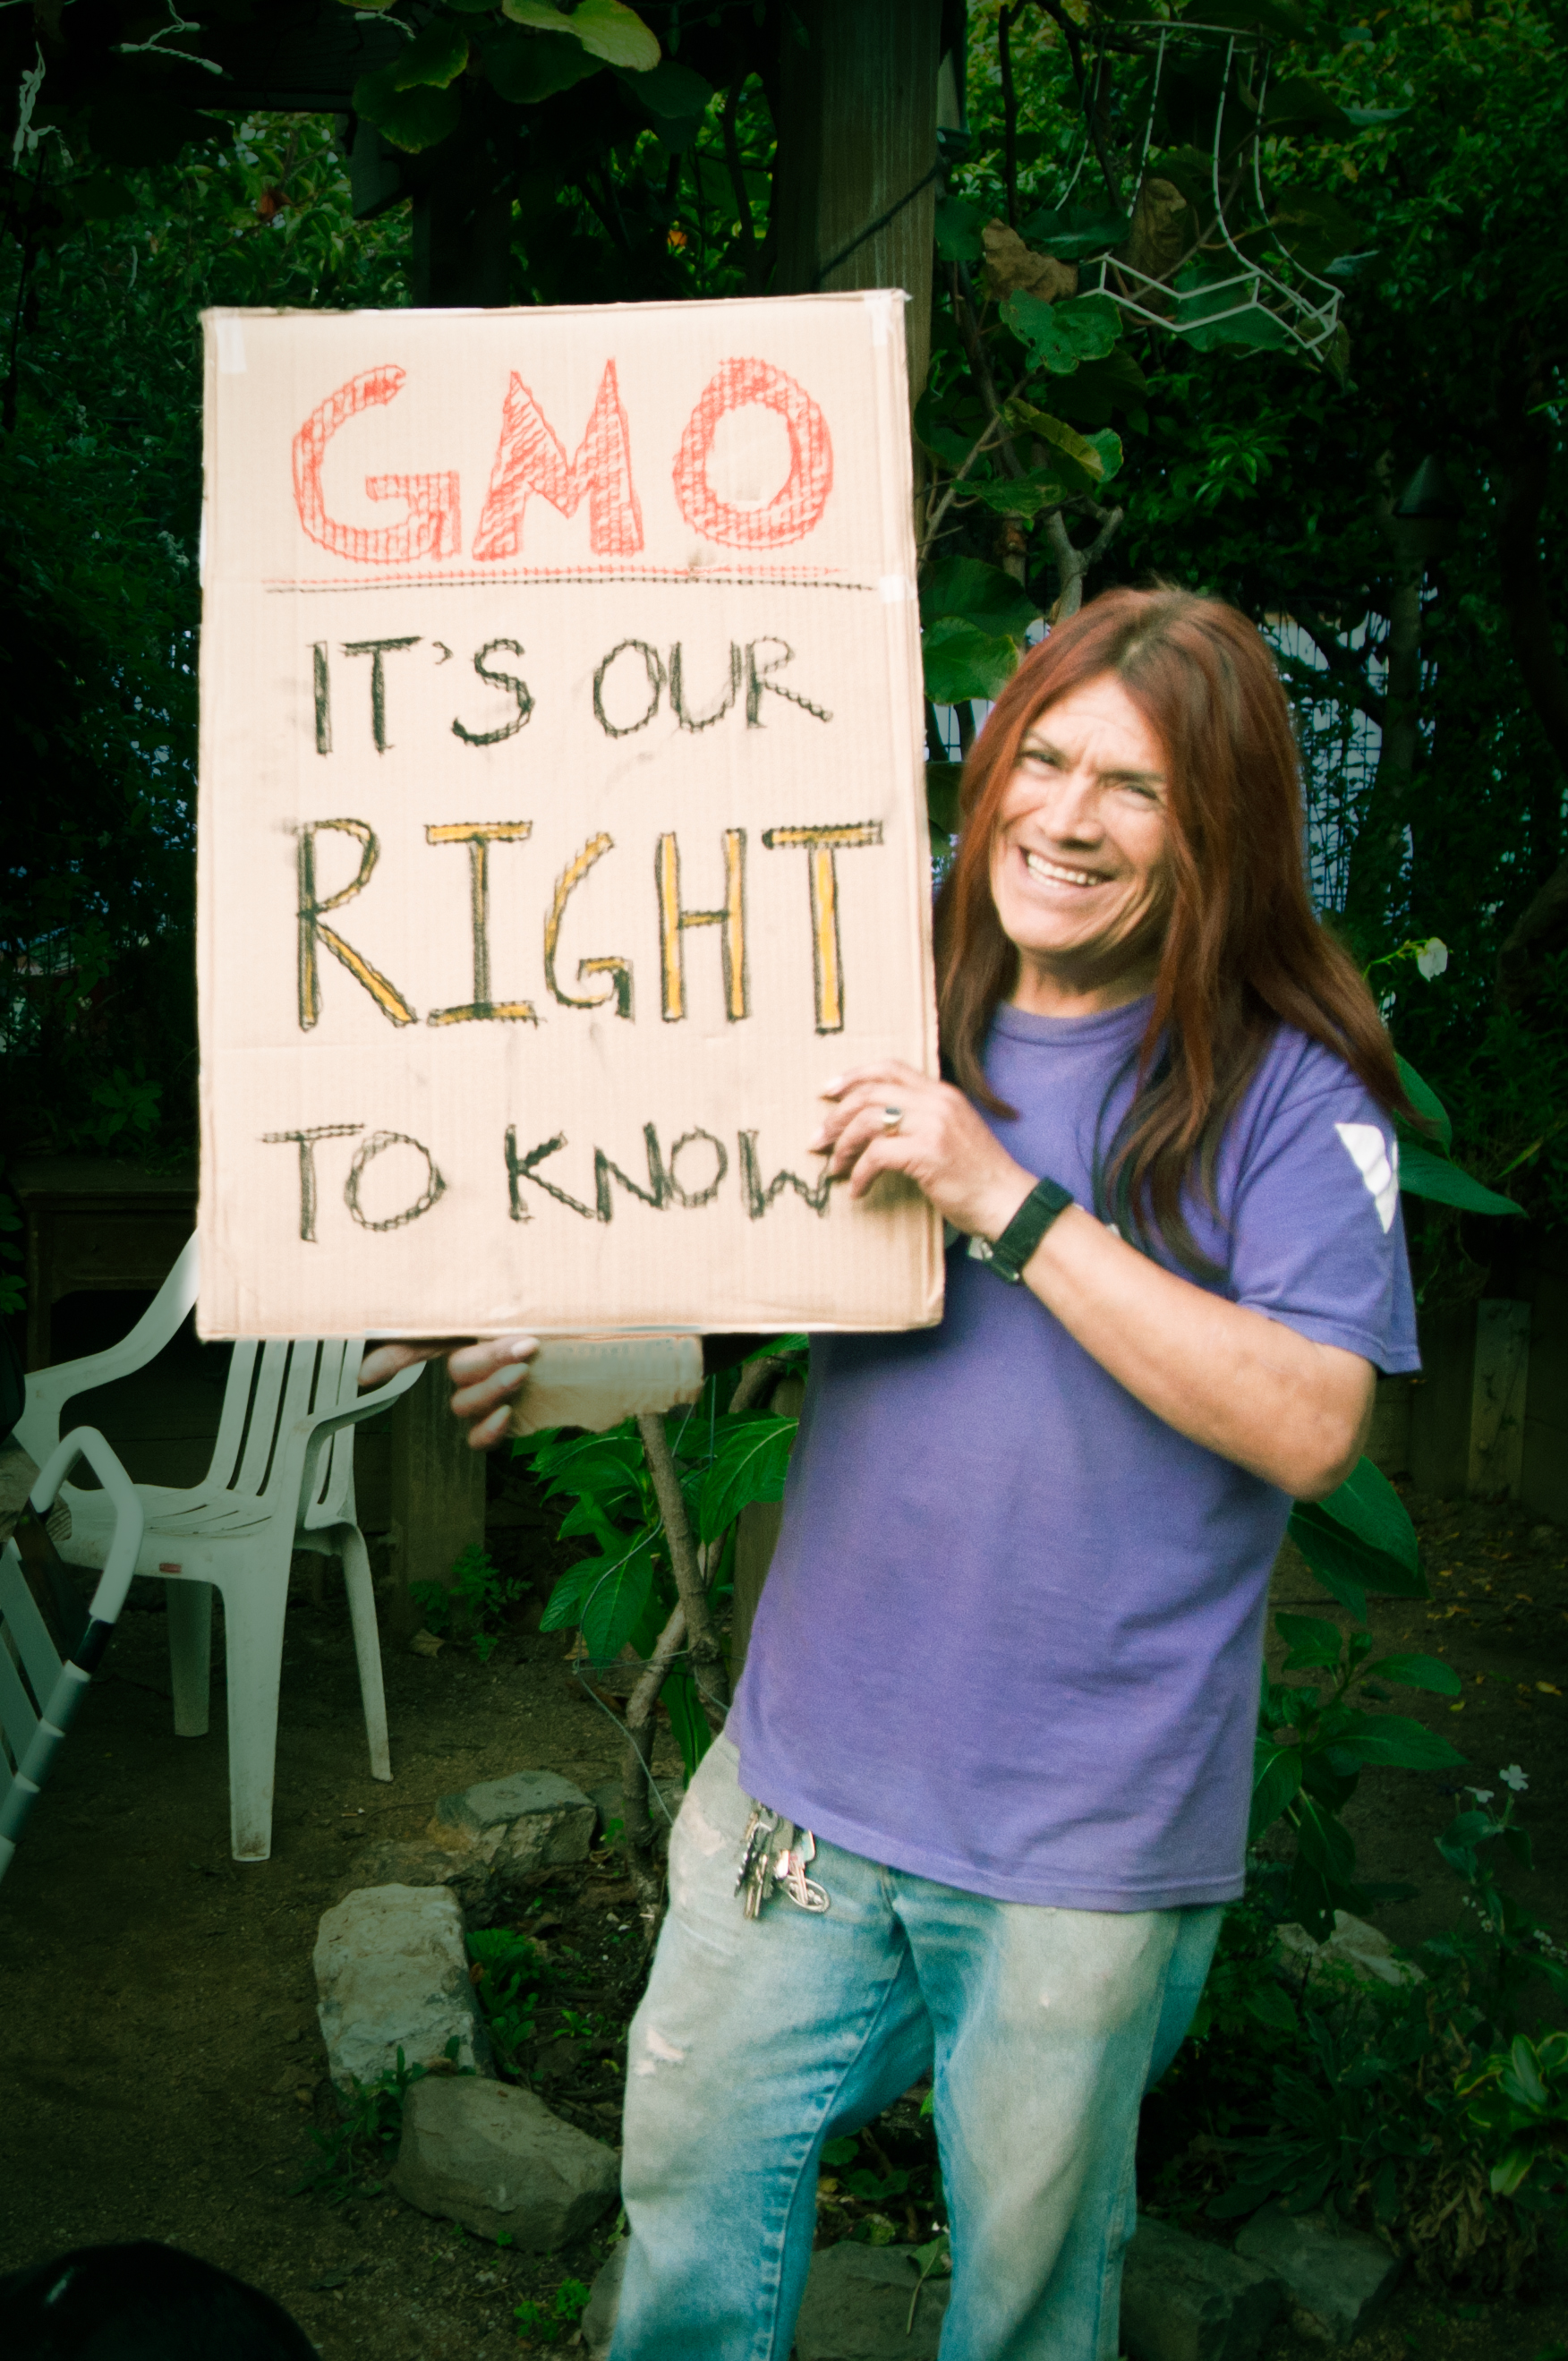 GMO Labeling